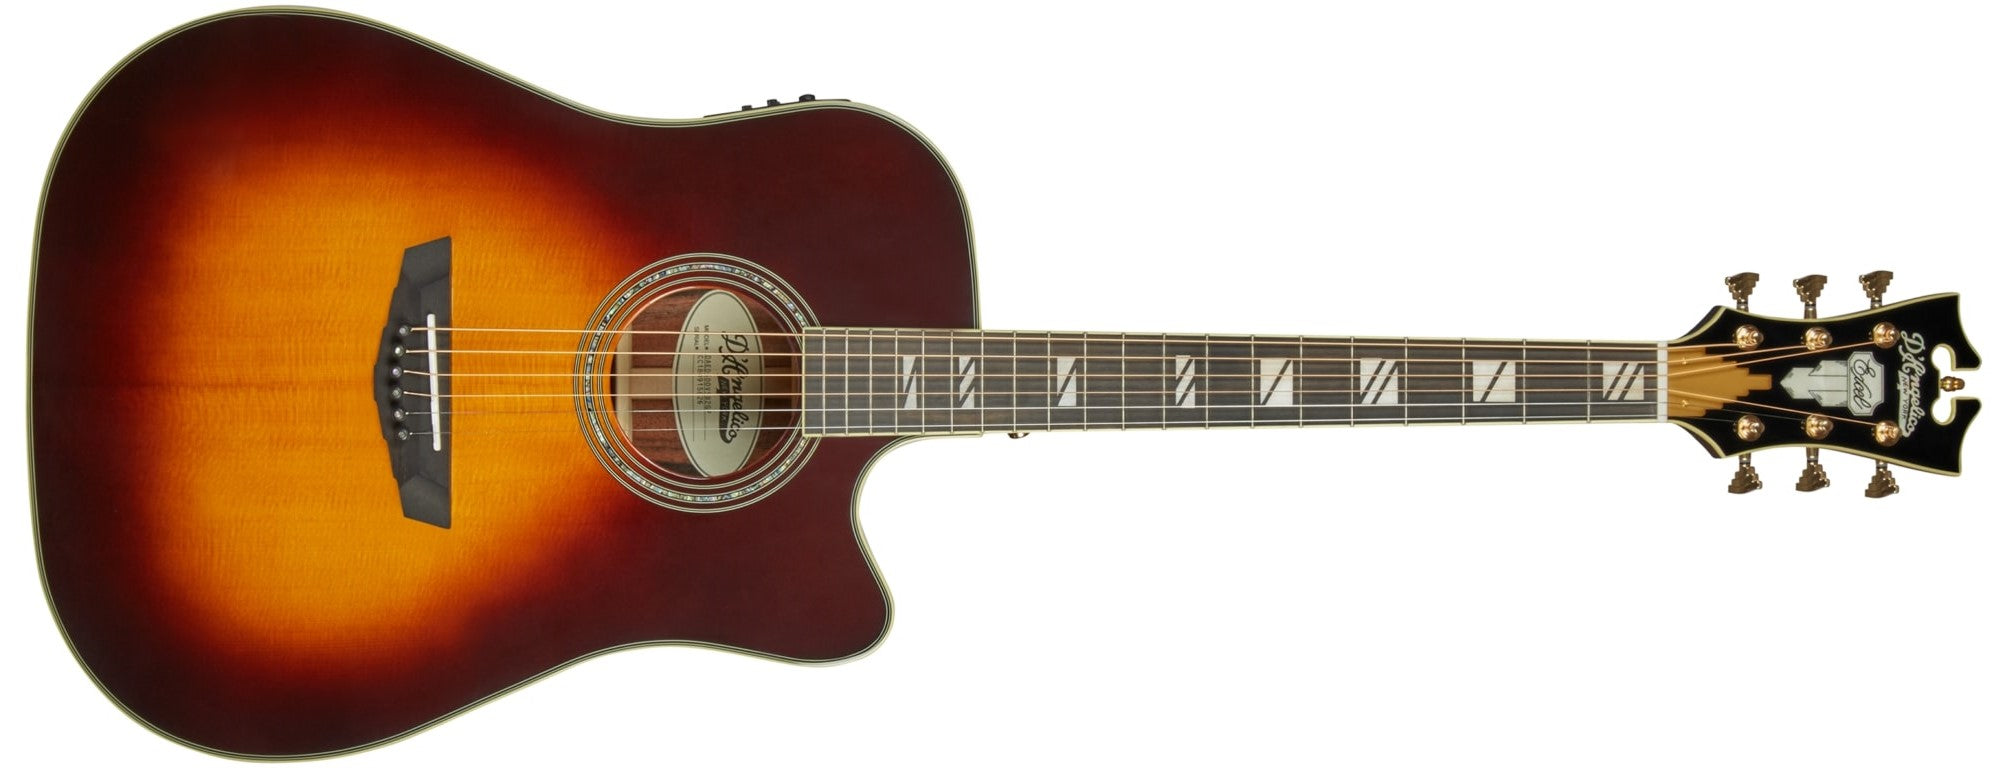 D'Angelico Excel Bowery Acoustic / Electric Guitar Vintage Sunburst DAED500VSB2GP